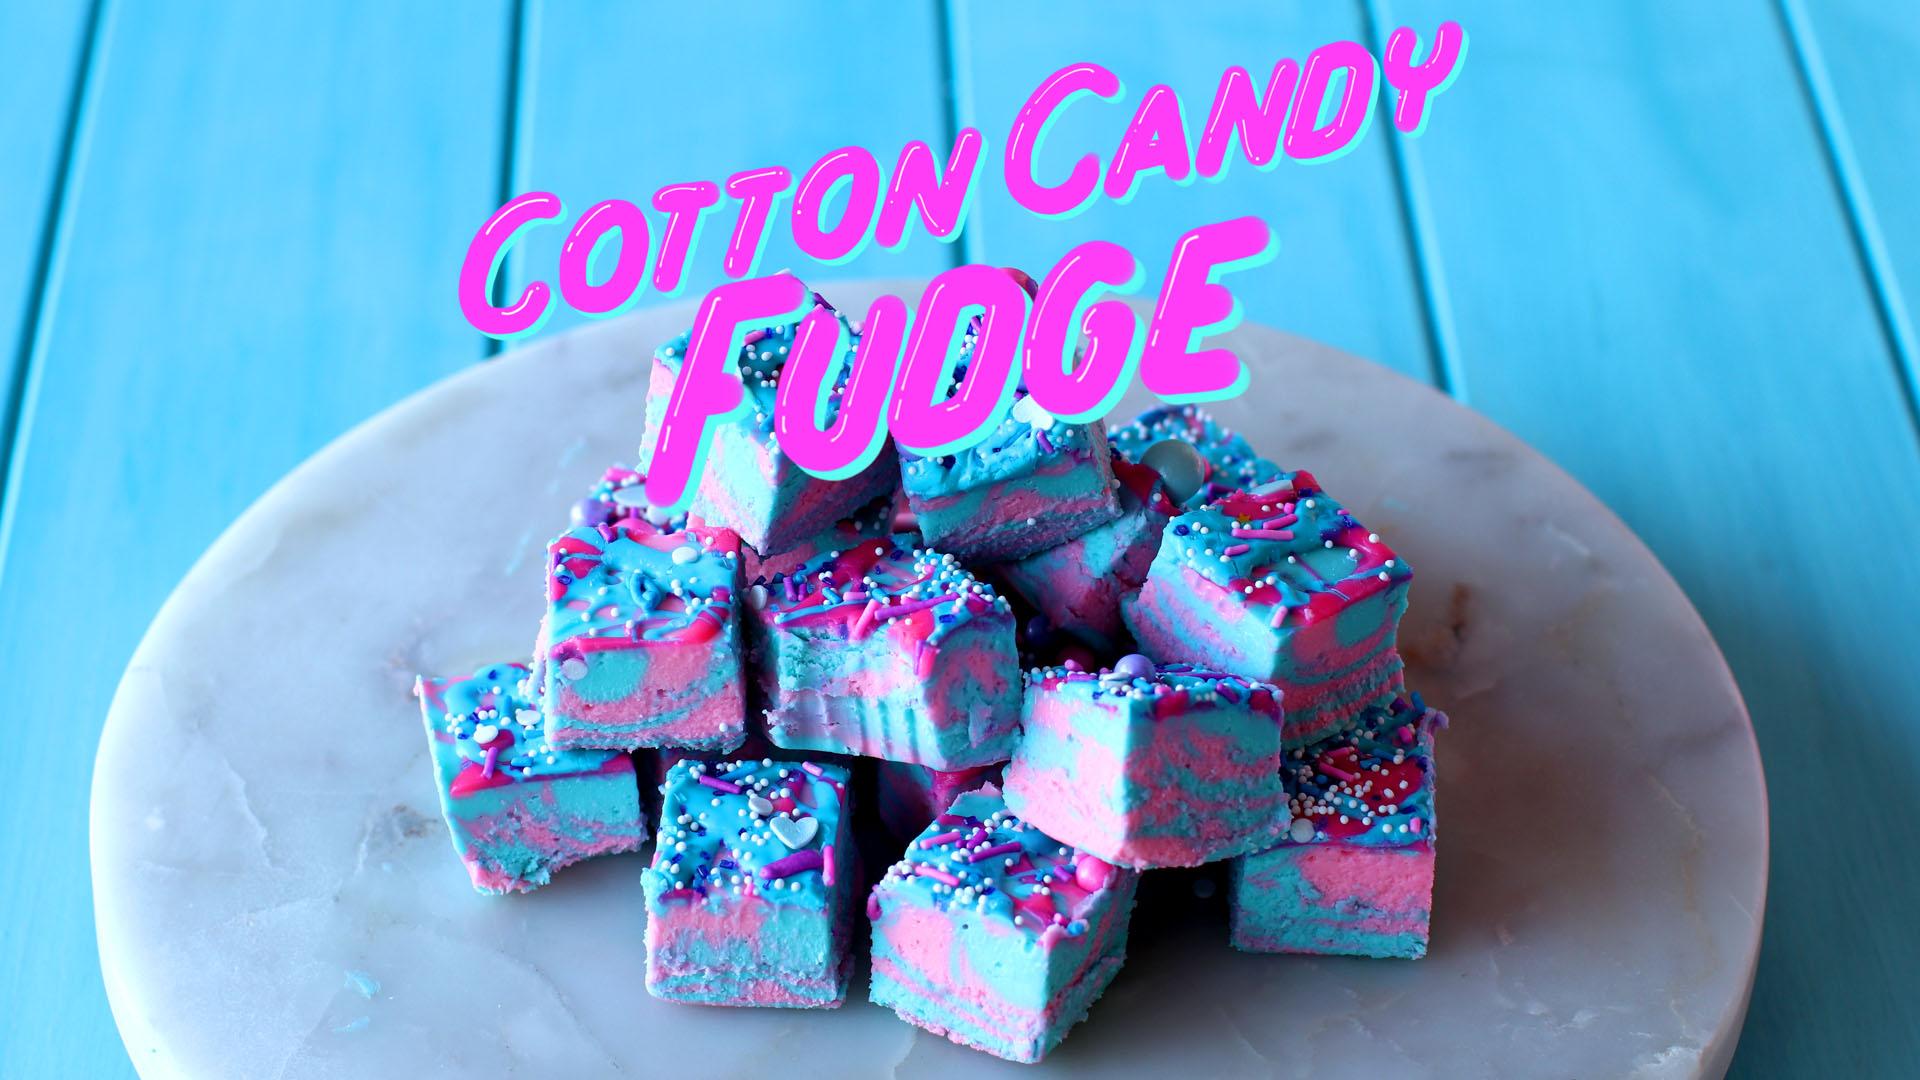 Cotton Candy Fudge